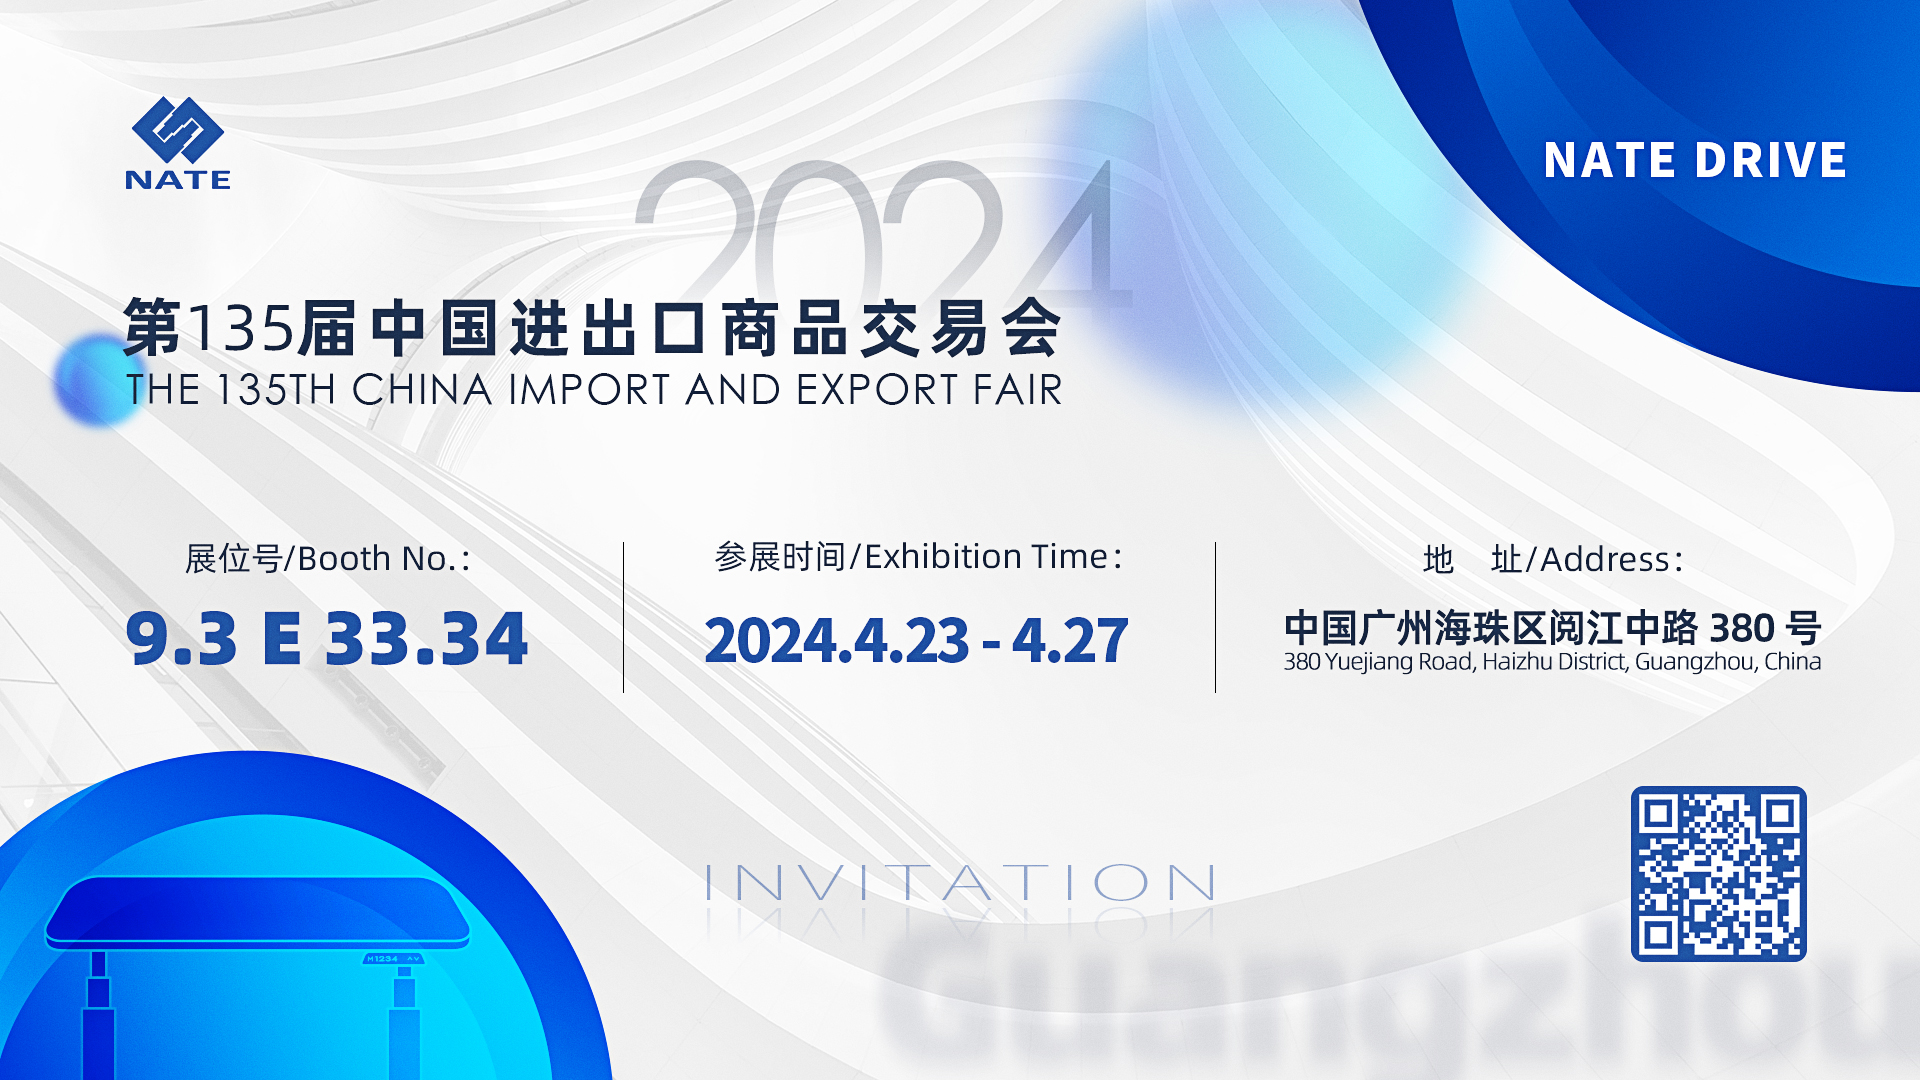 2024.4.23-27 invitation